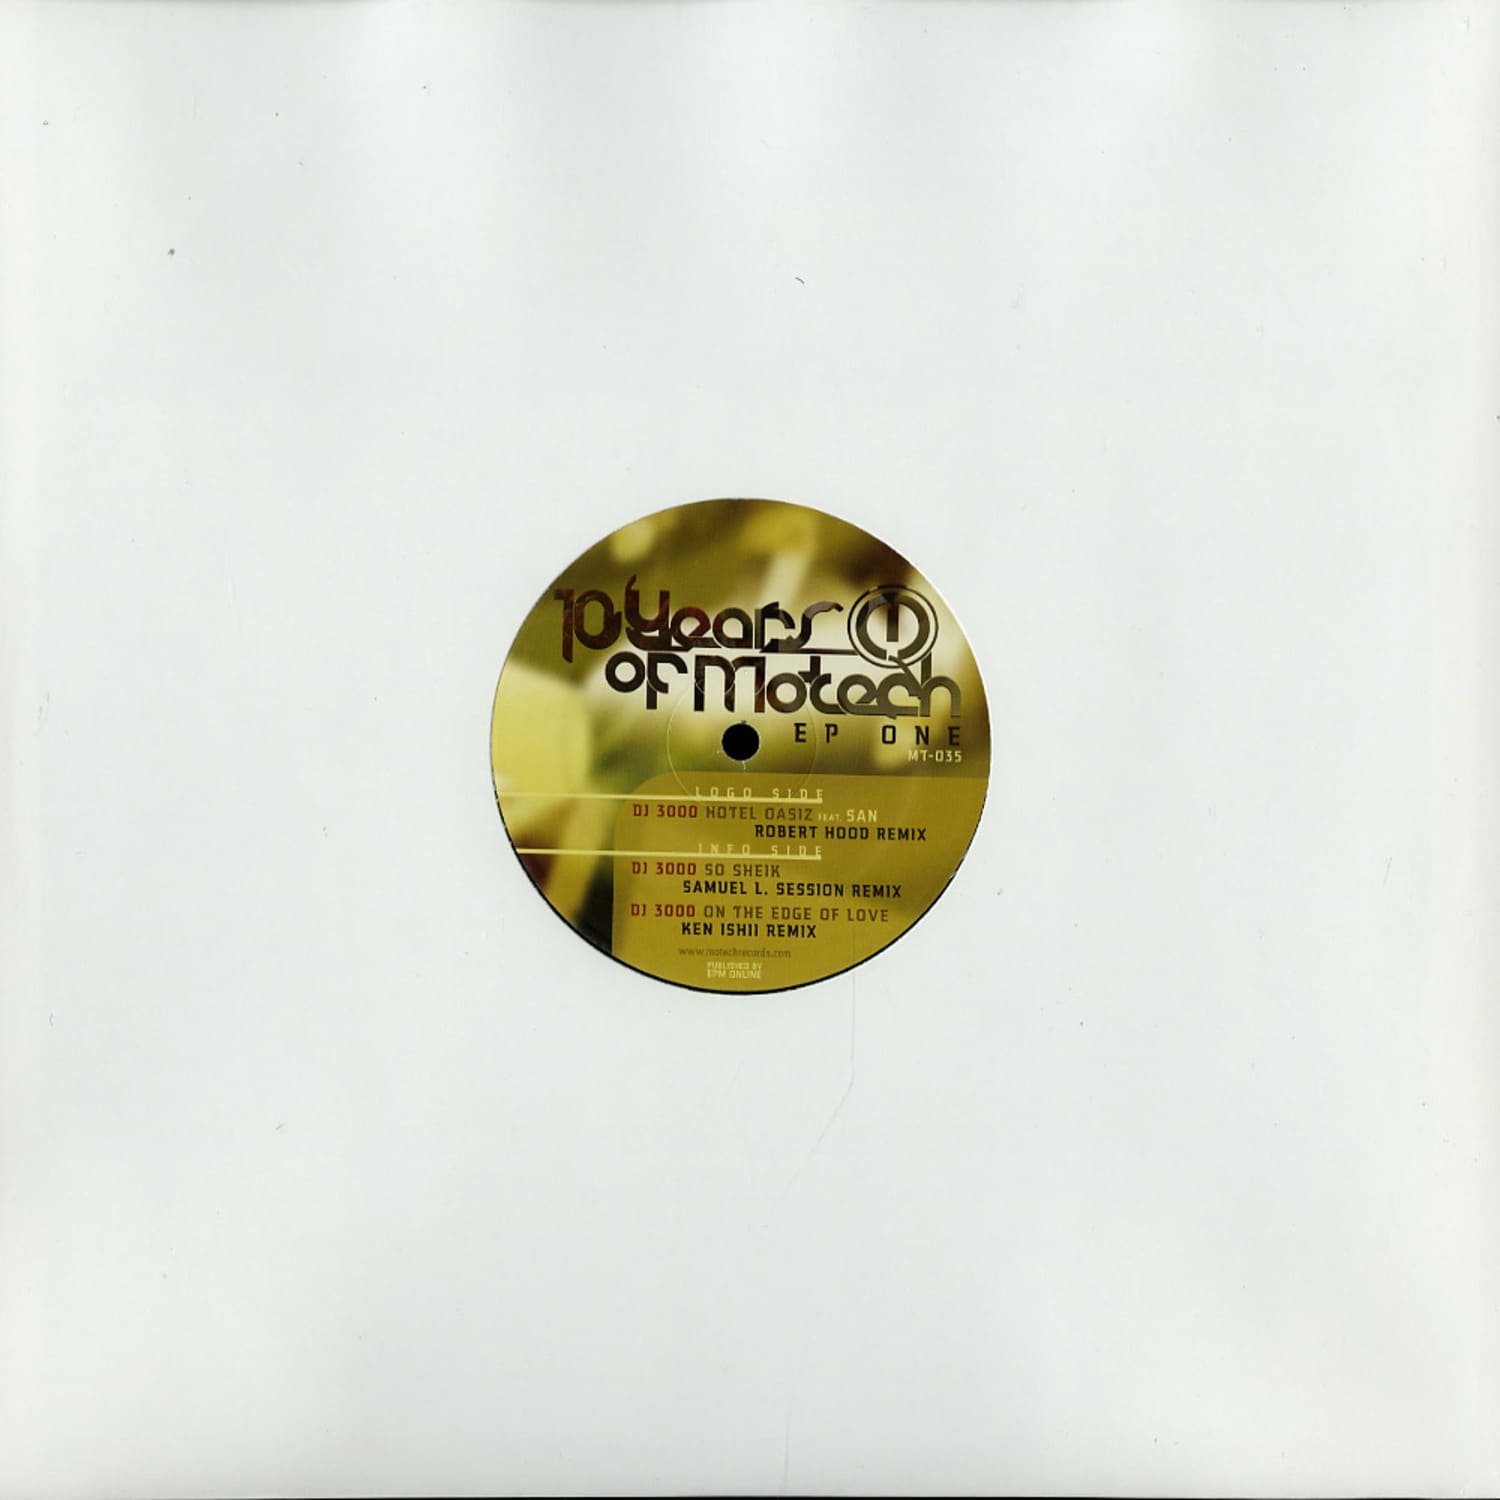 DJ 3000 / Robert Hood / Samuel L. Session / Ken Ishii - 10 YEARS OF MOTECH EP ONE